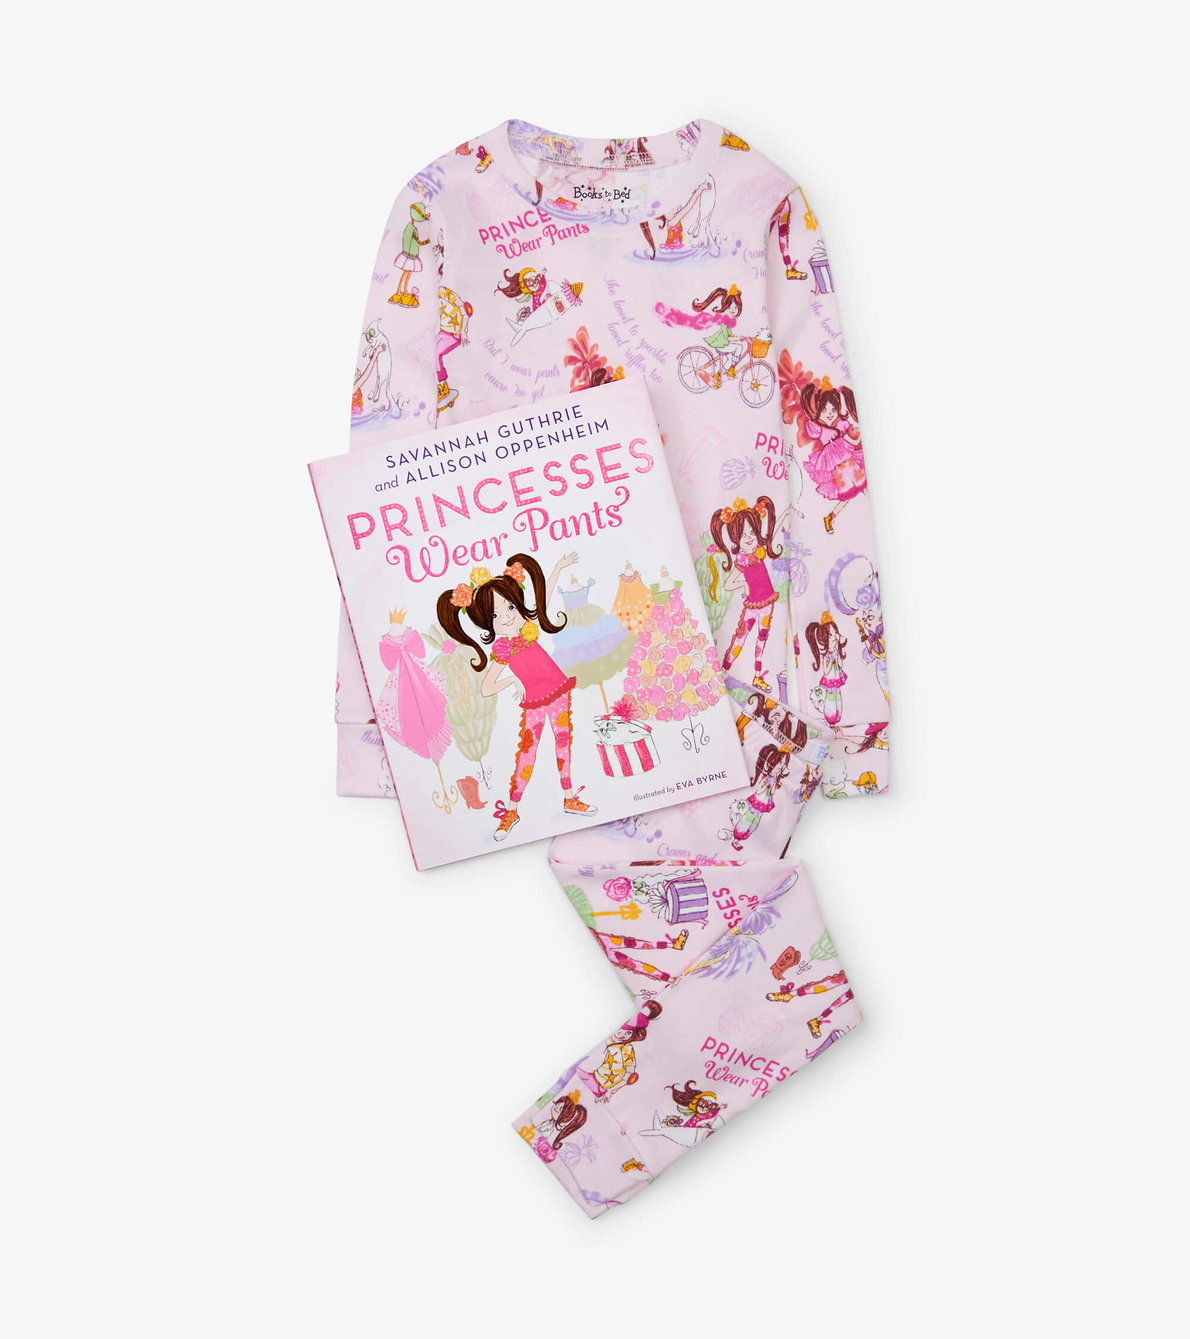 View larger image of Princesses Wear Pants Book and Pajama Set